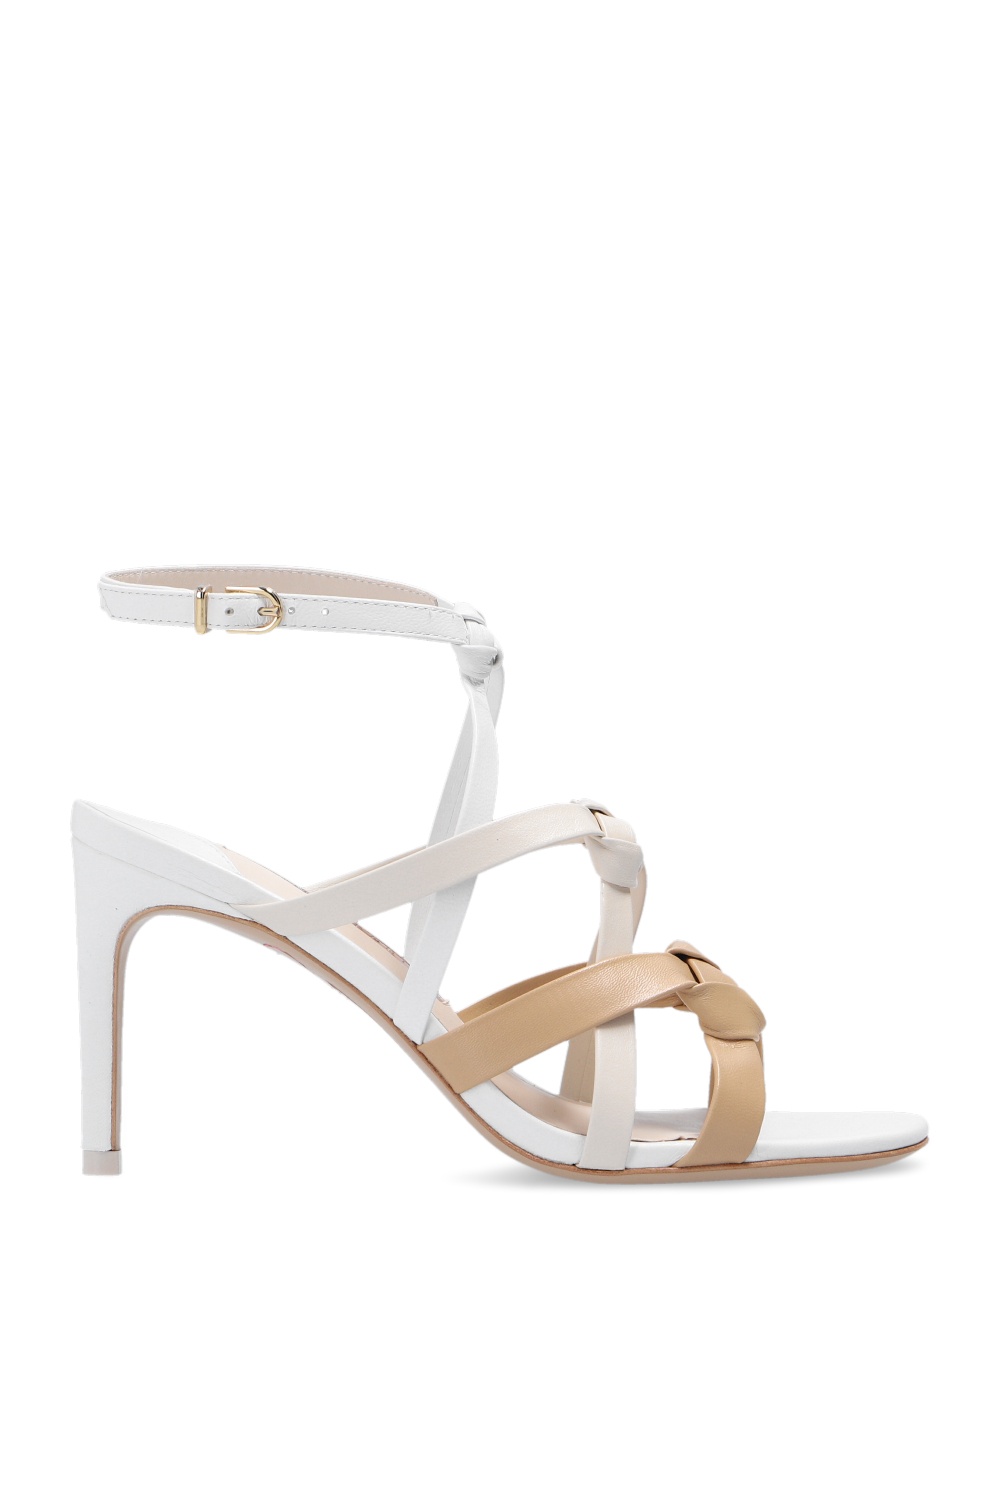 ‘Ramona’ stiletto sandals Sophia Webster - Vitkac Switzerland